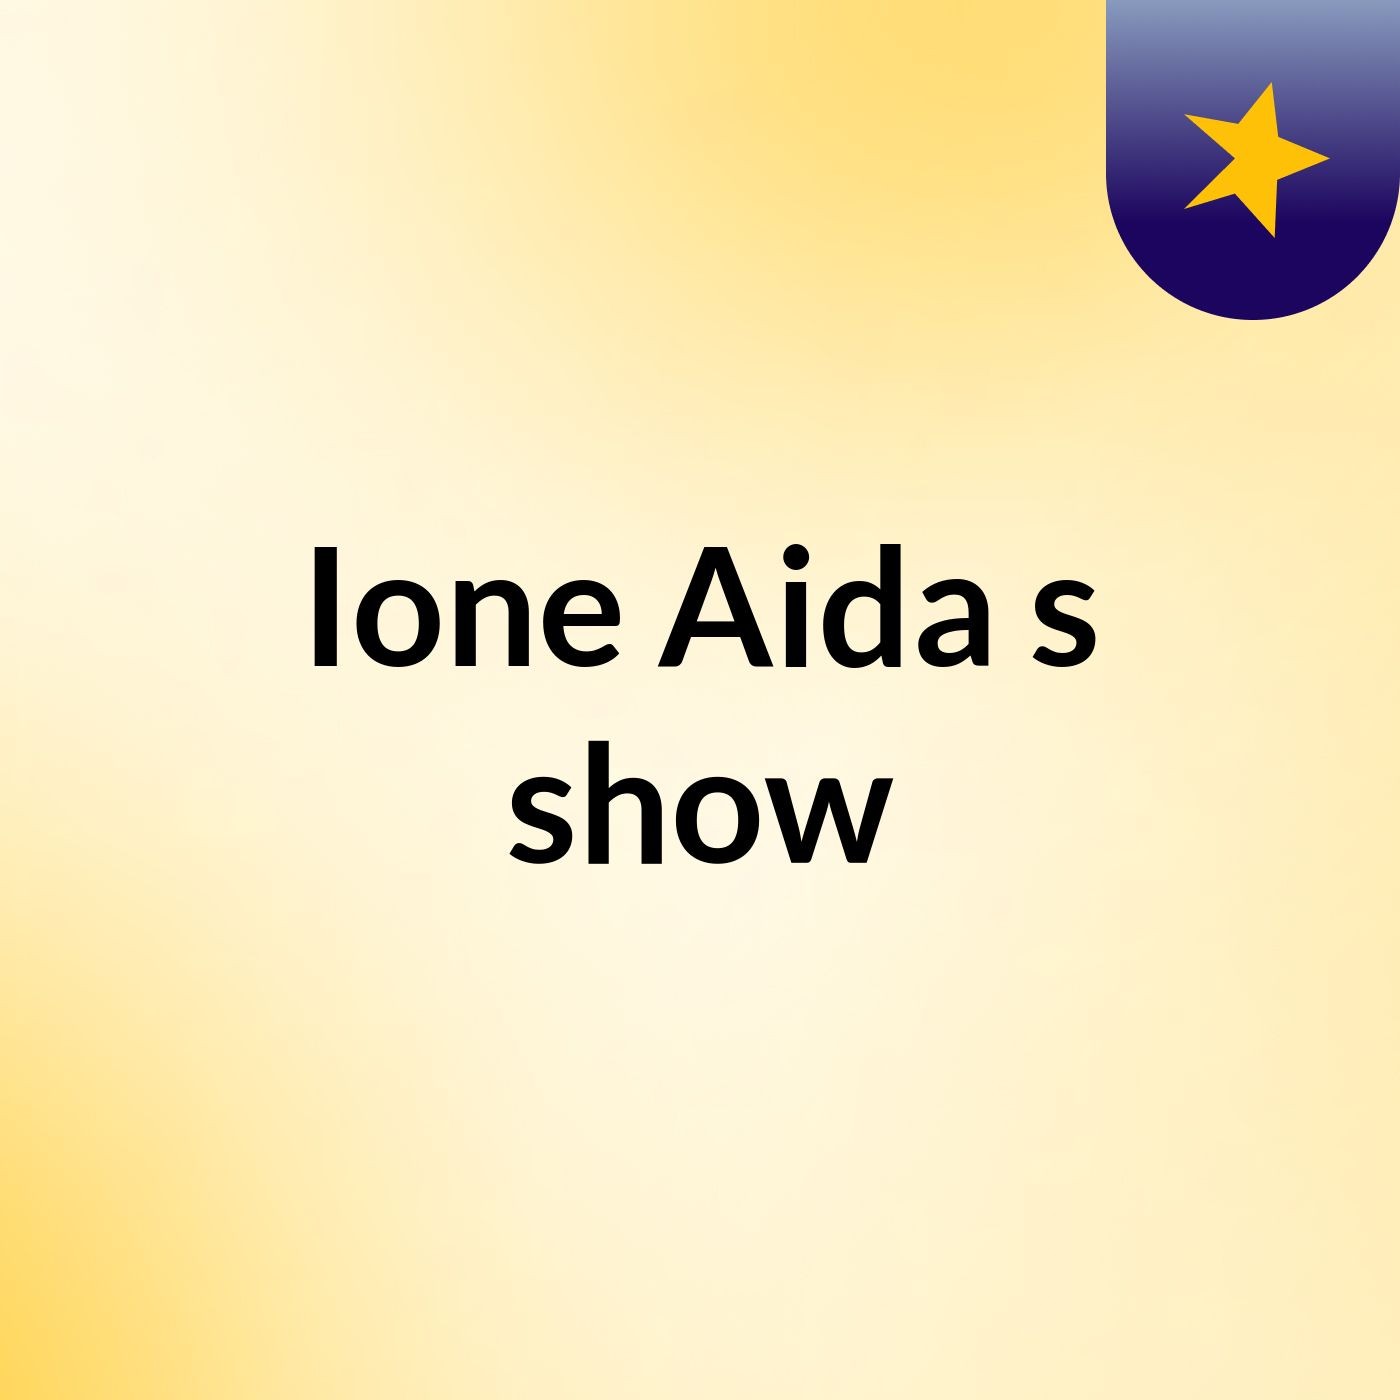 Ione Aida's show